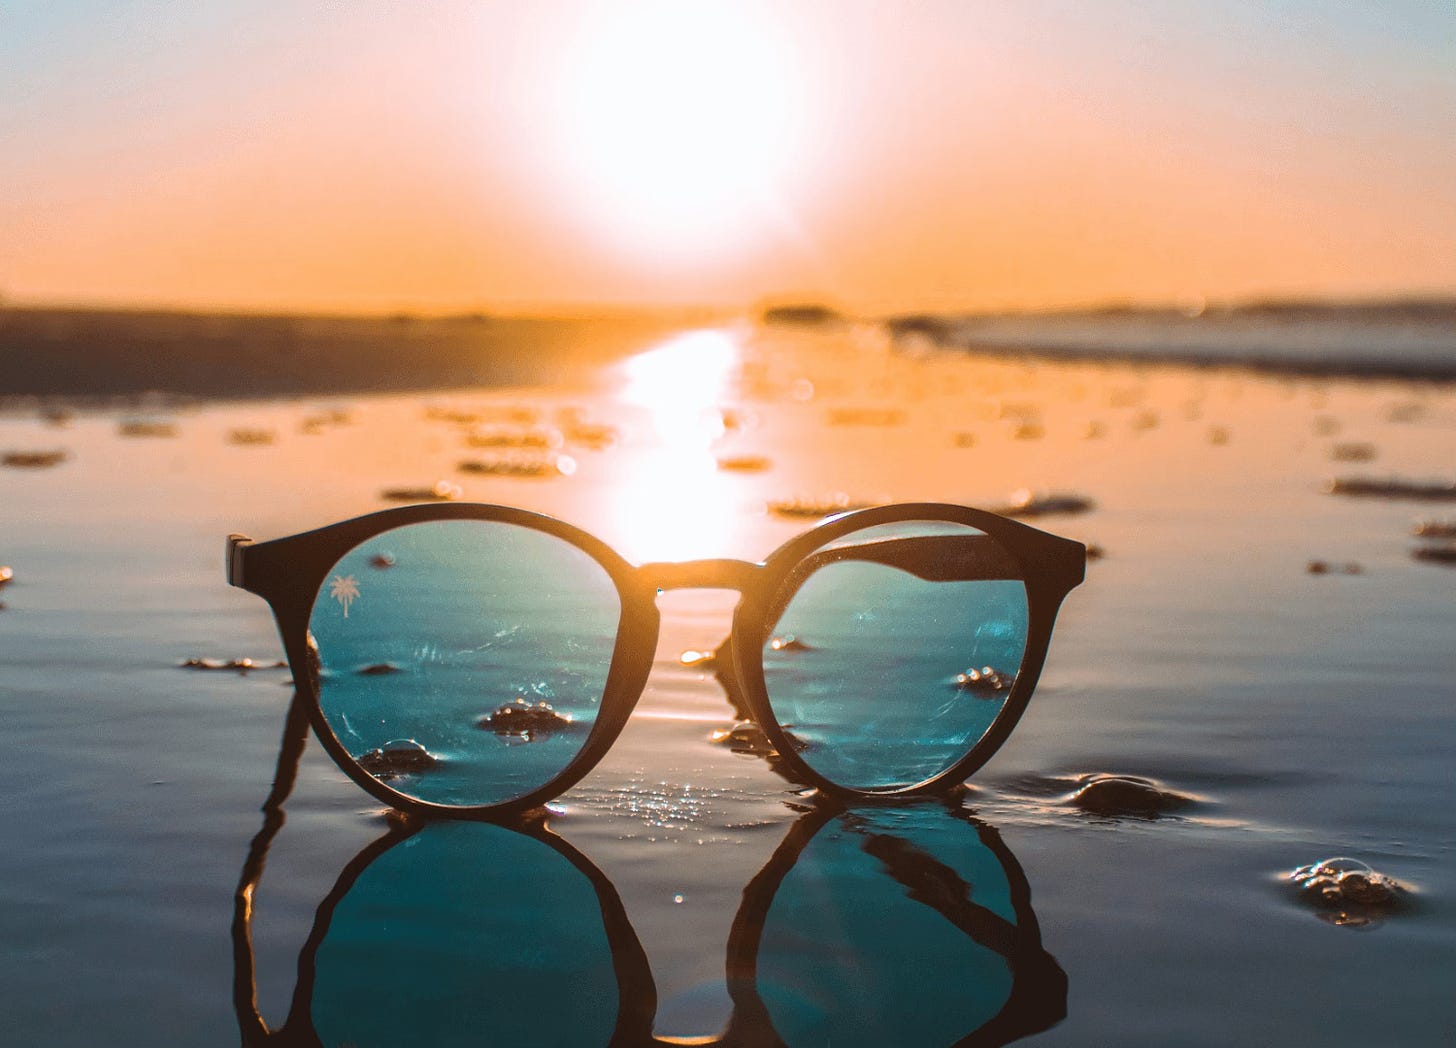 Sunglasses on beach sand at sunset